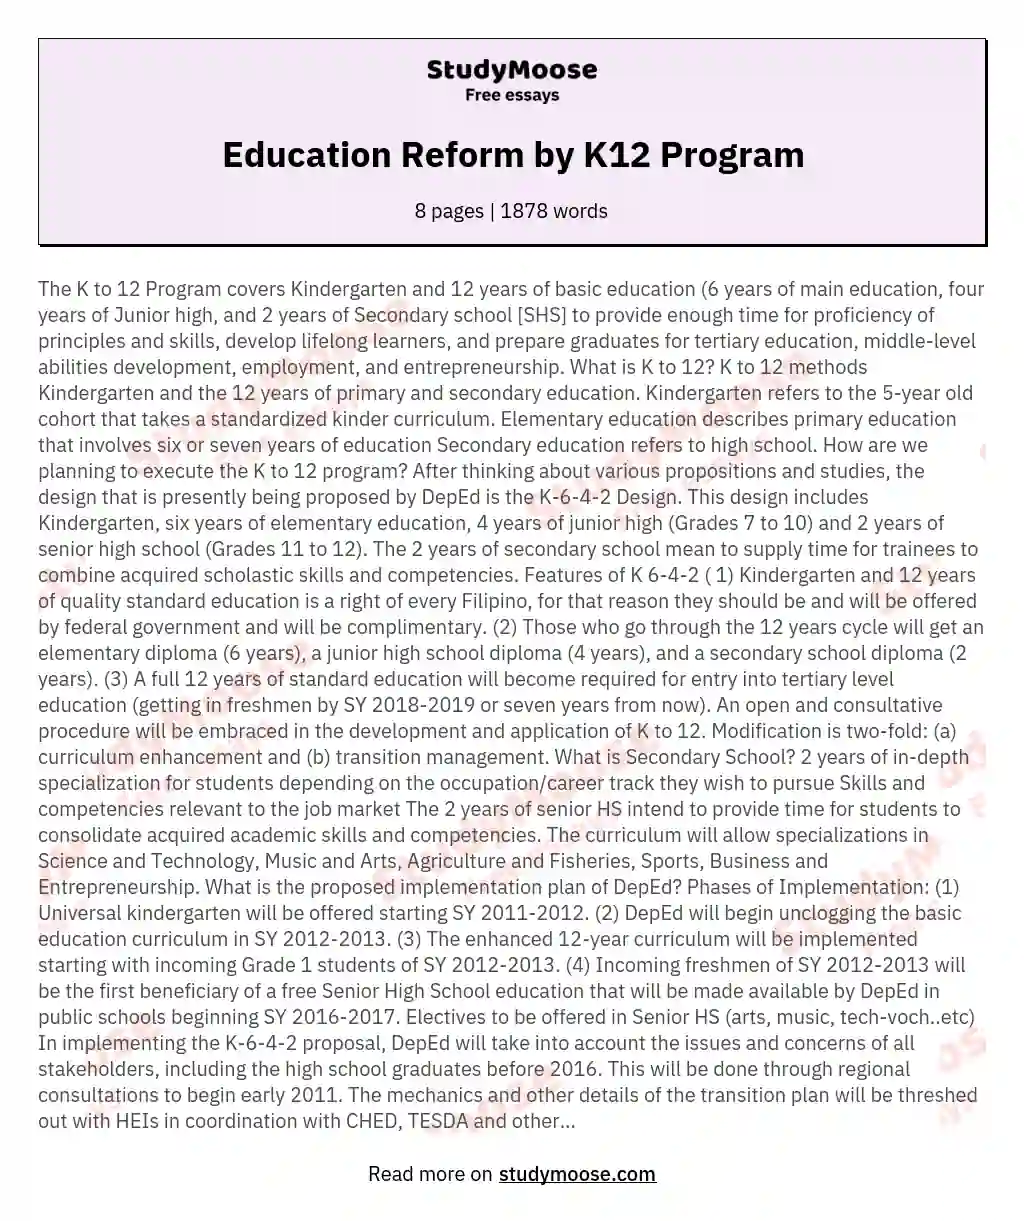 Education Reform by K12 Program essay